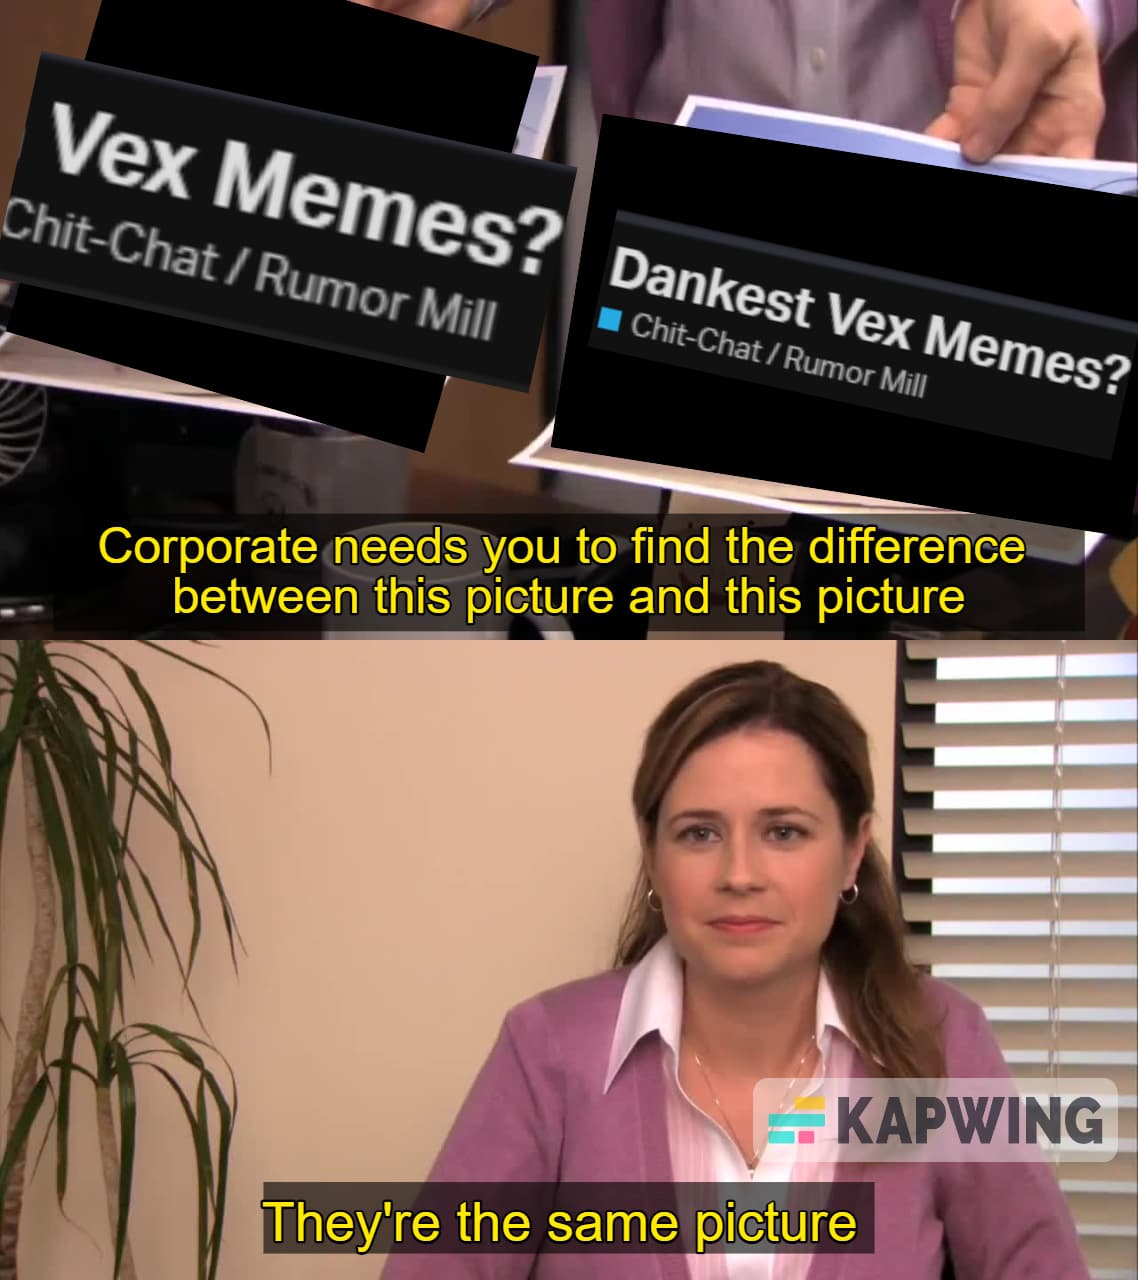 Dankest Vex Memes? - Chit-Chat / Rumor Mill - VEX Forum